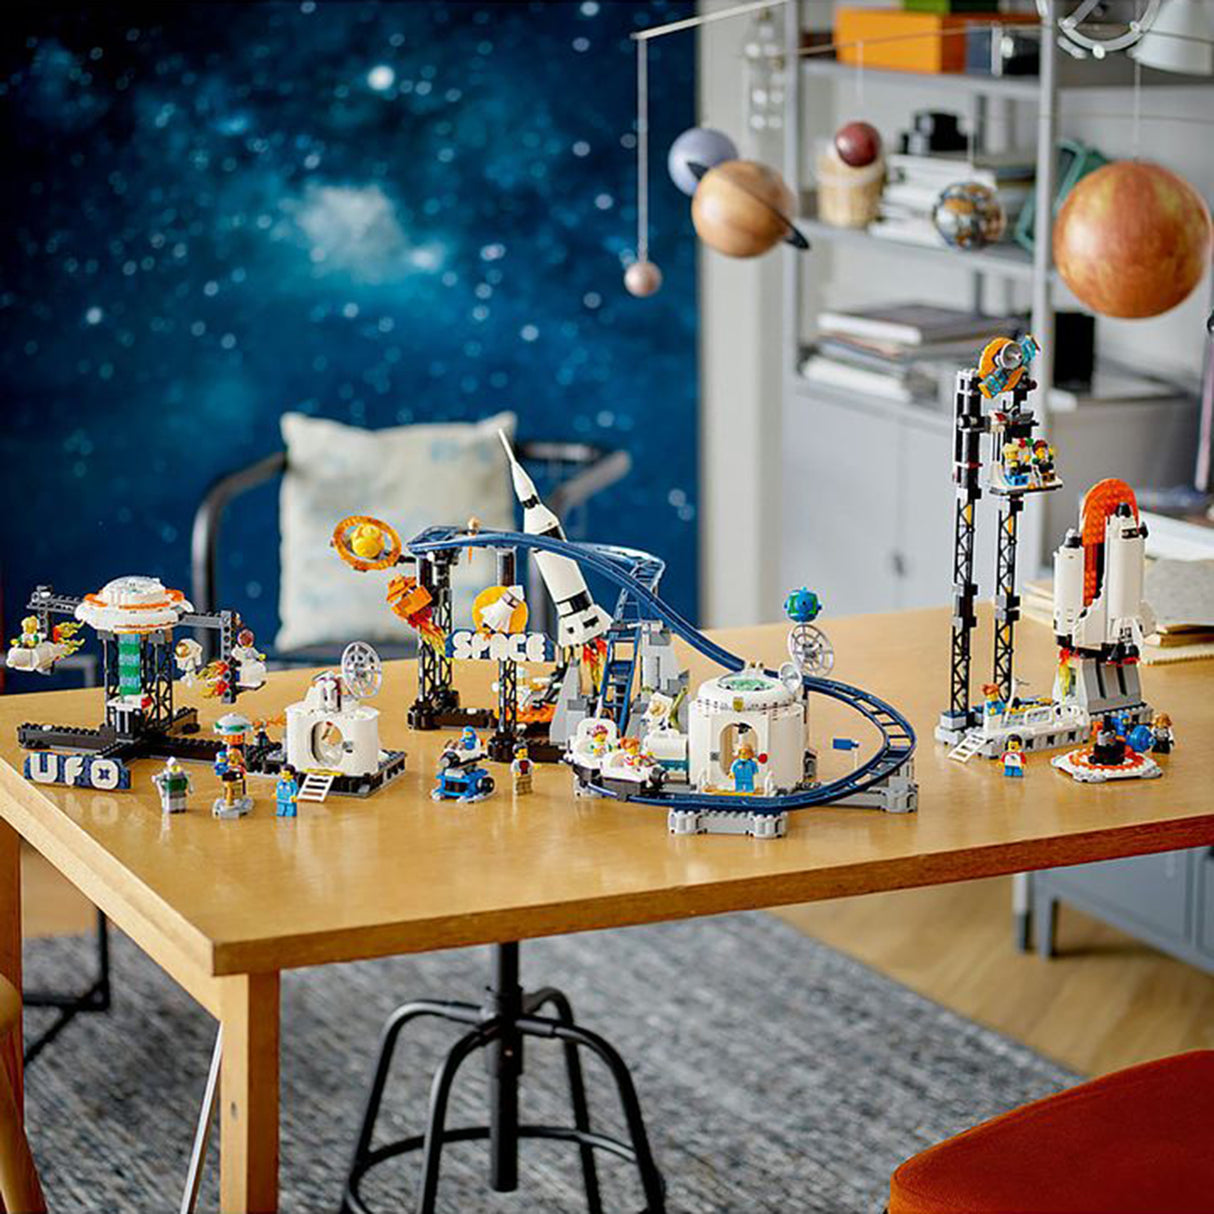 LEGO Creator Space Roller Coaster 31142 (874 pieces)